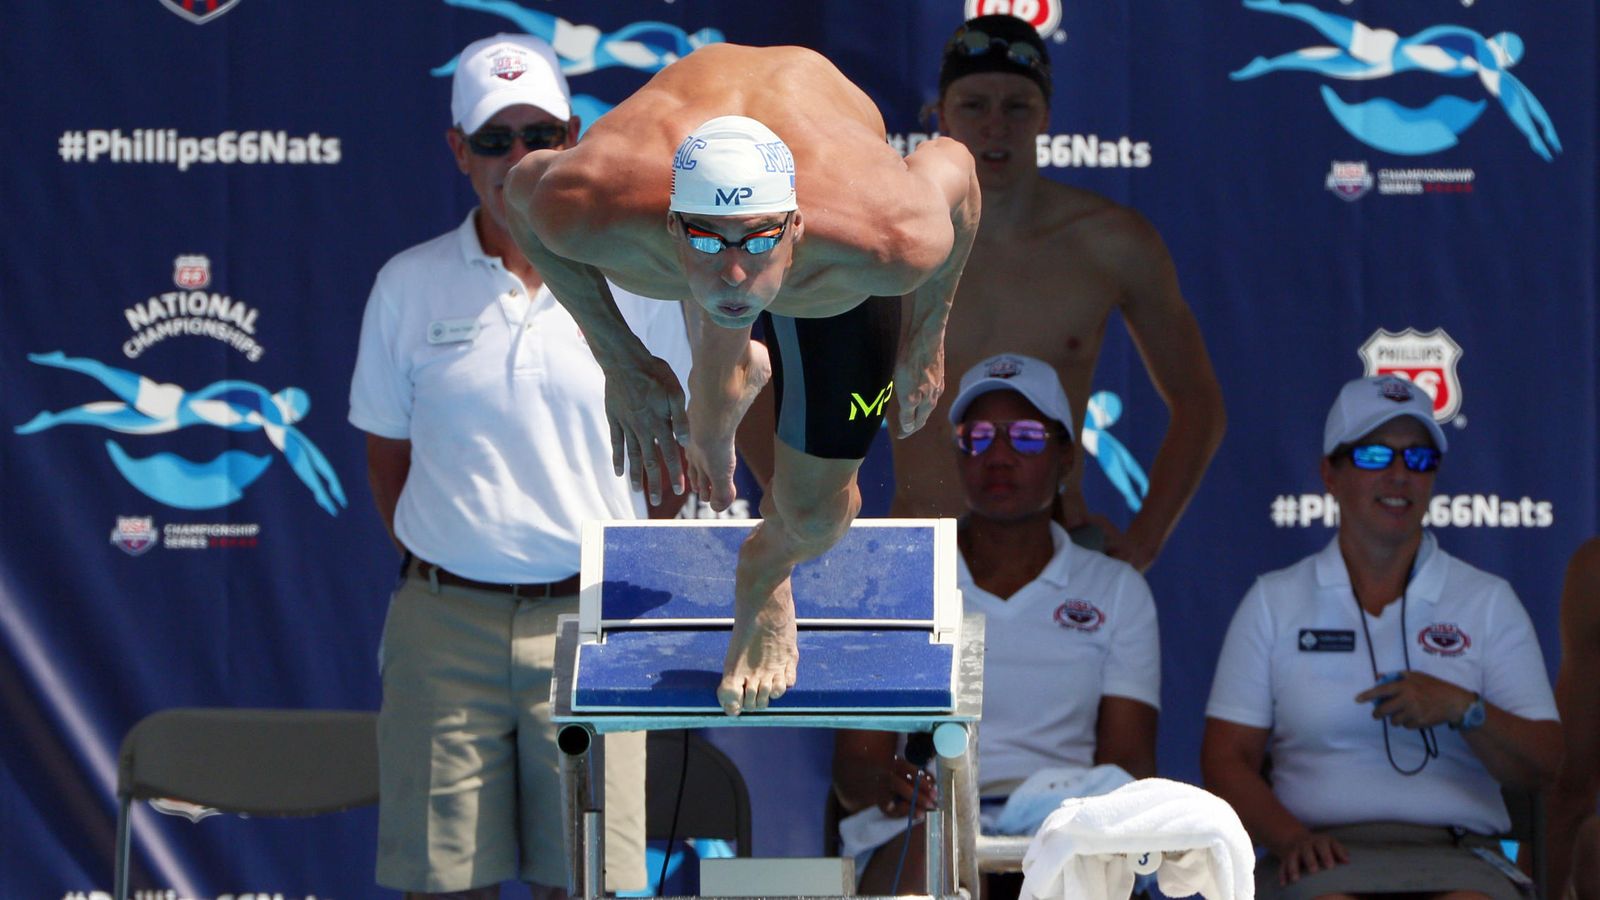 Foto: Swimming: phillips 66 national championships